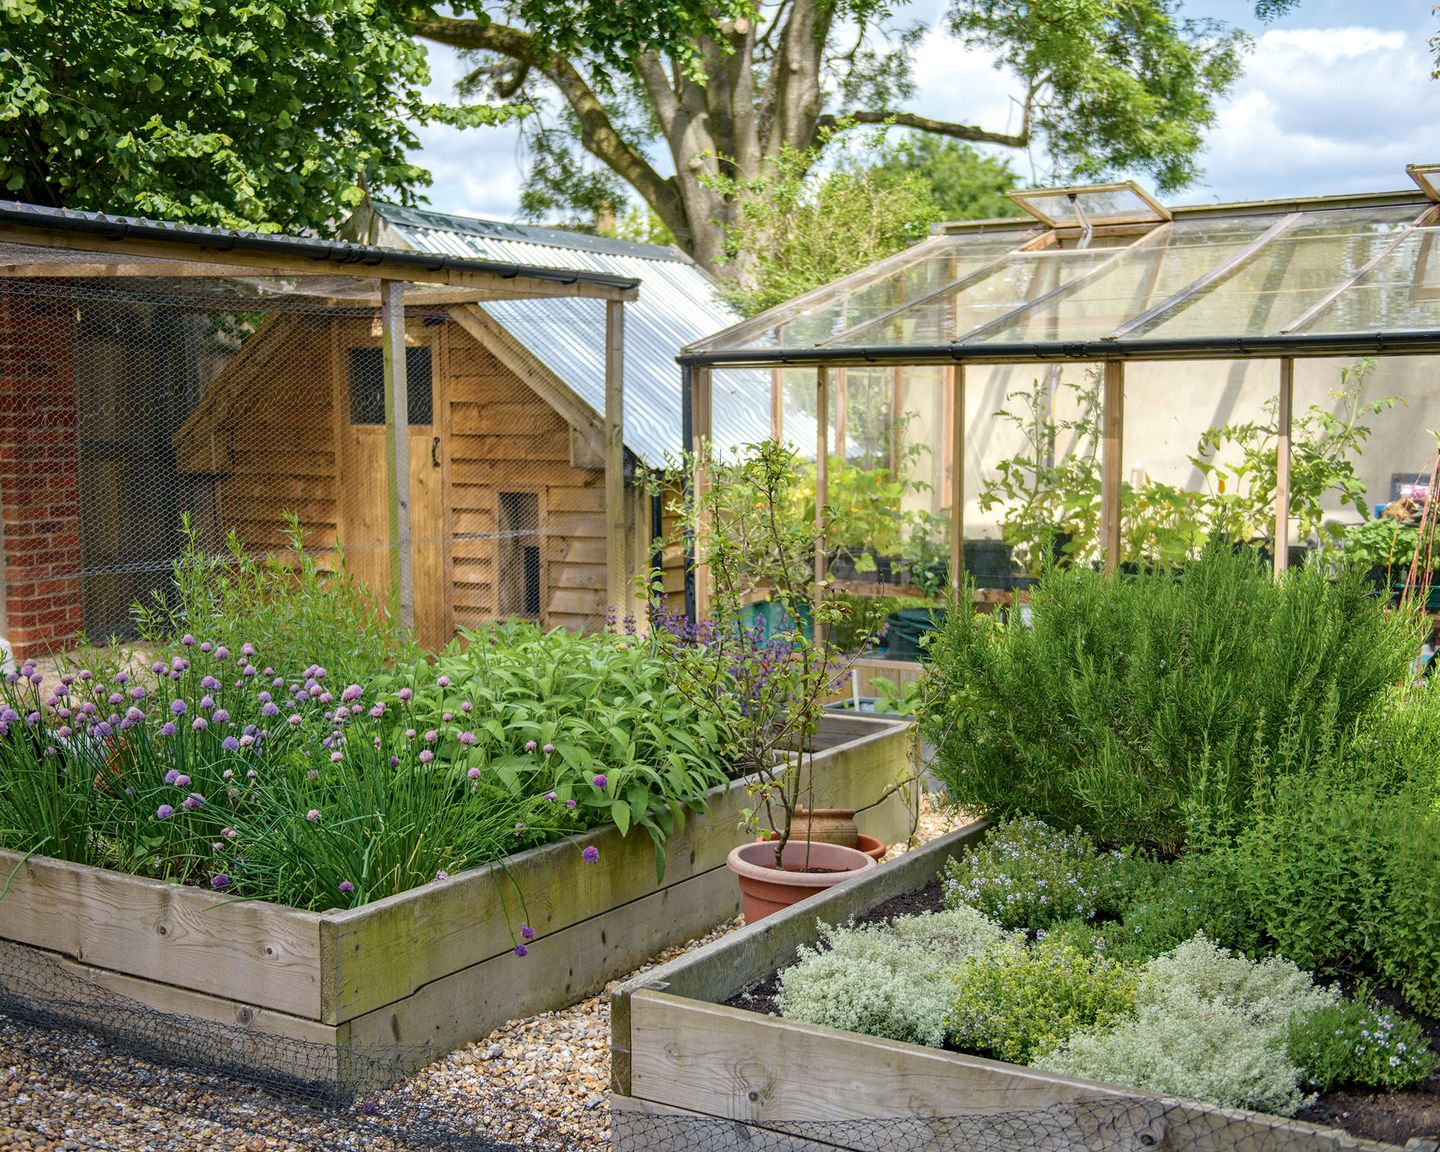 Raised bed garden ideas – easy raised garden bed designs | Country